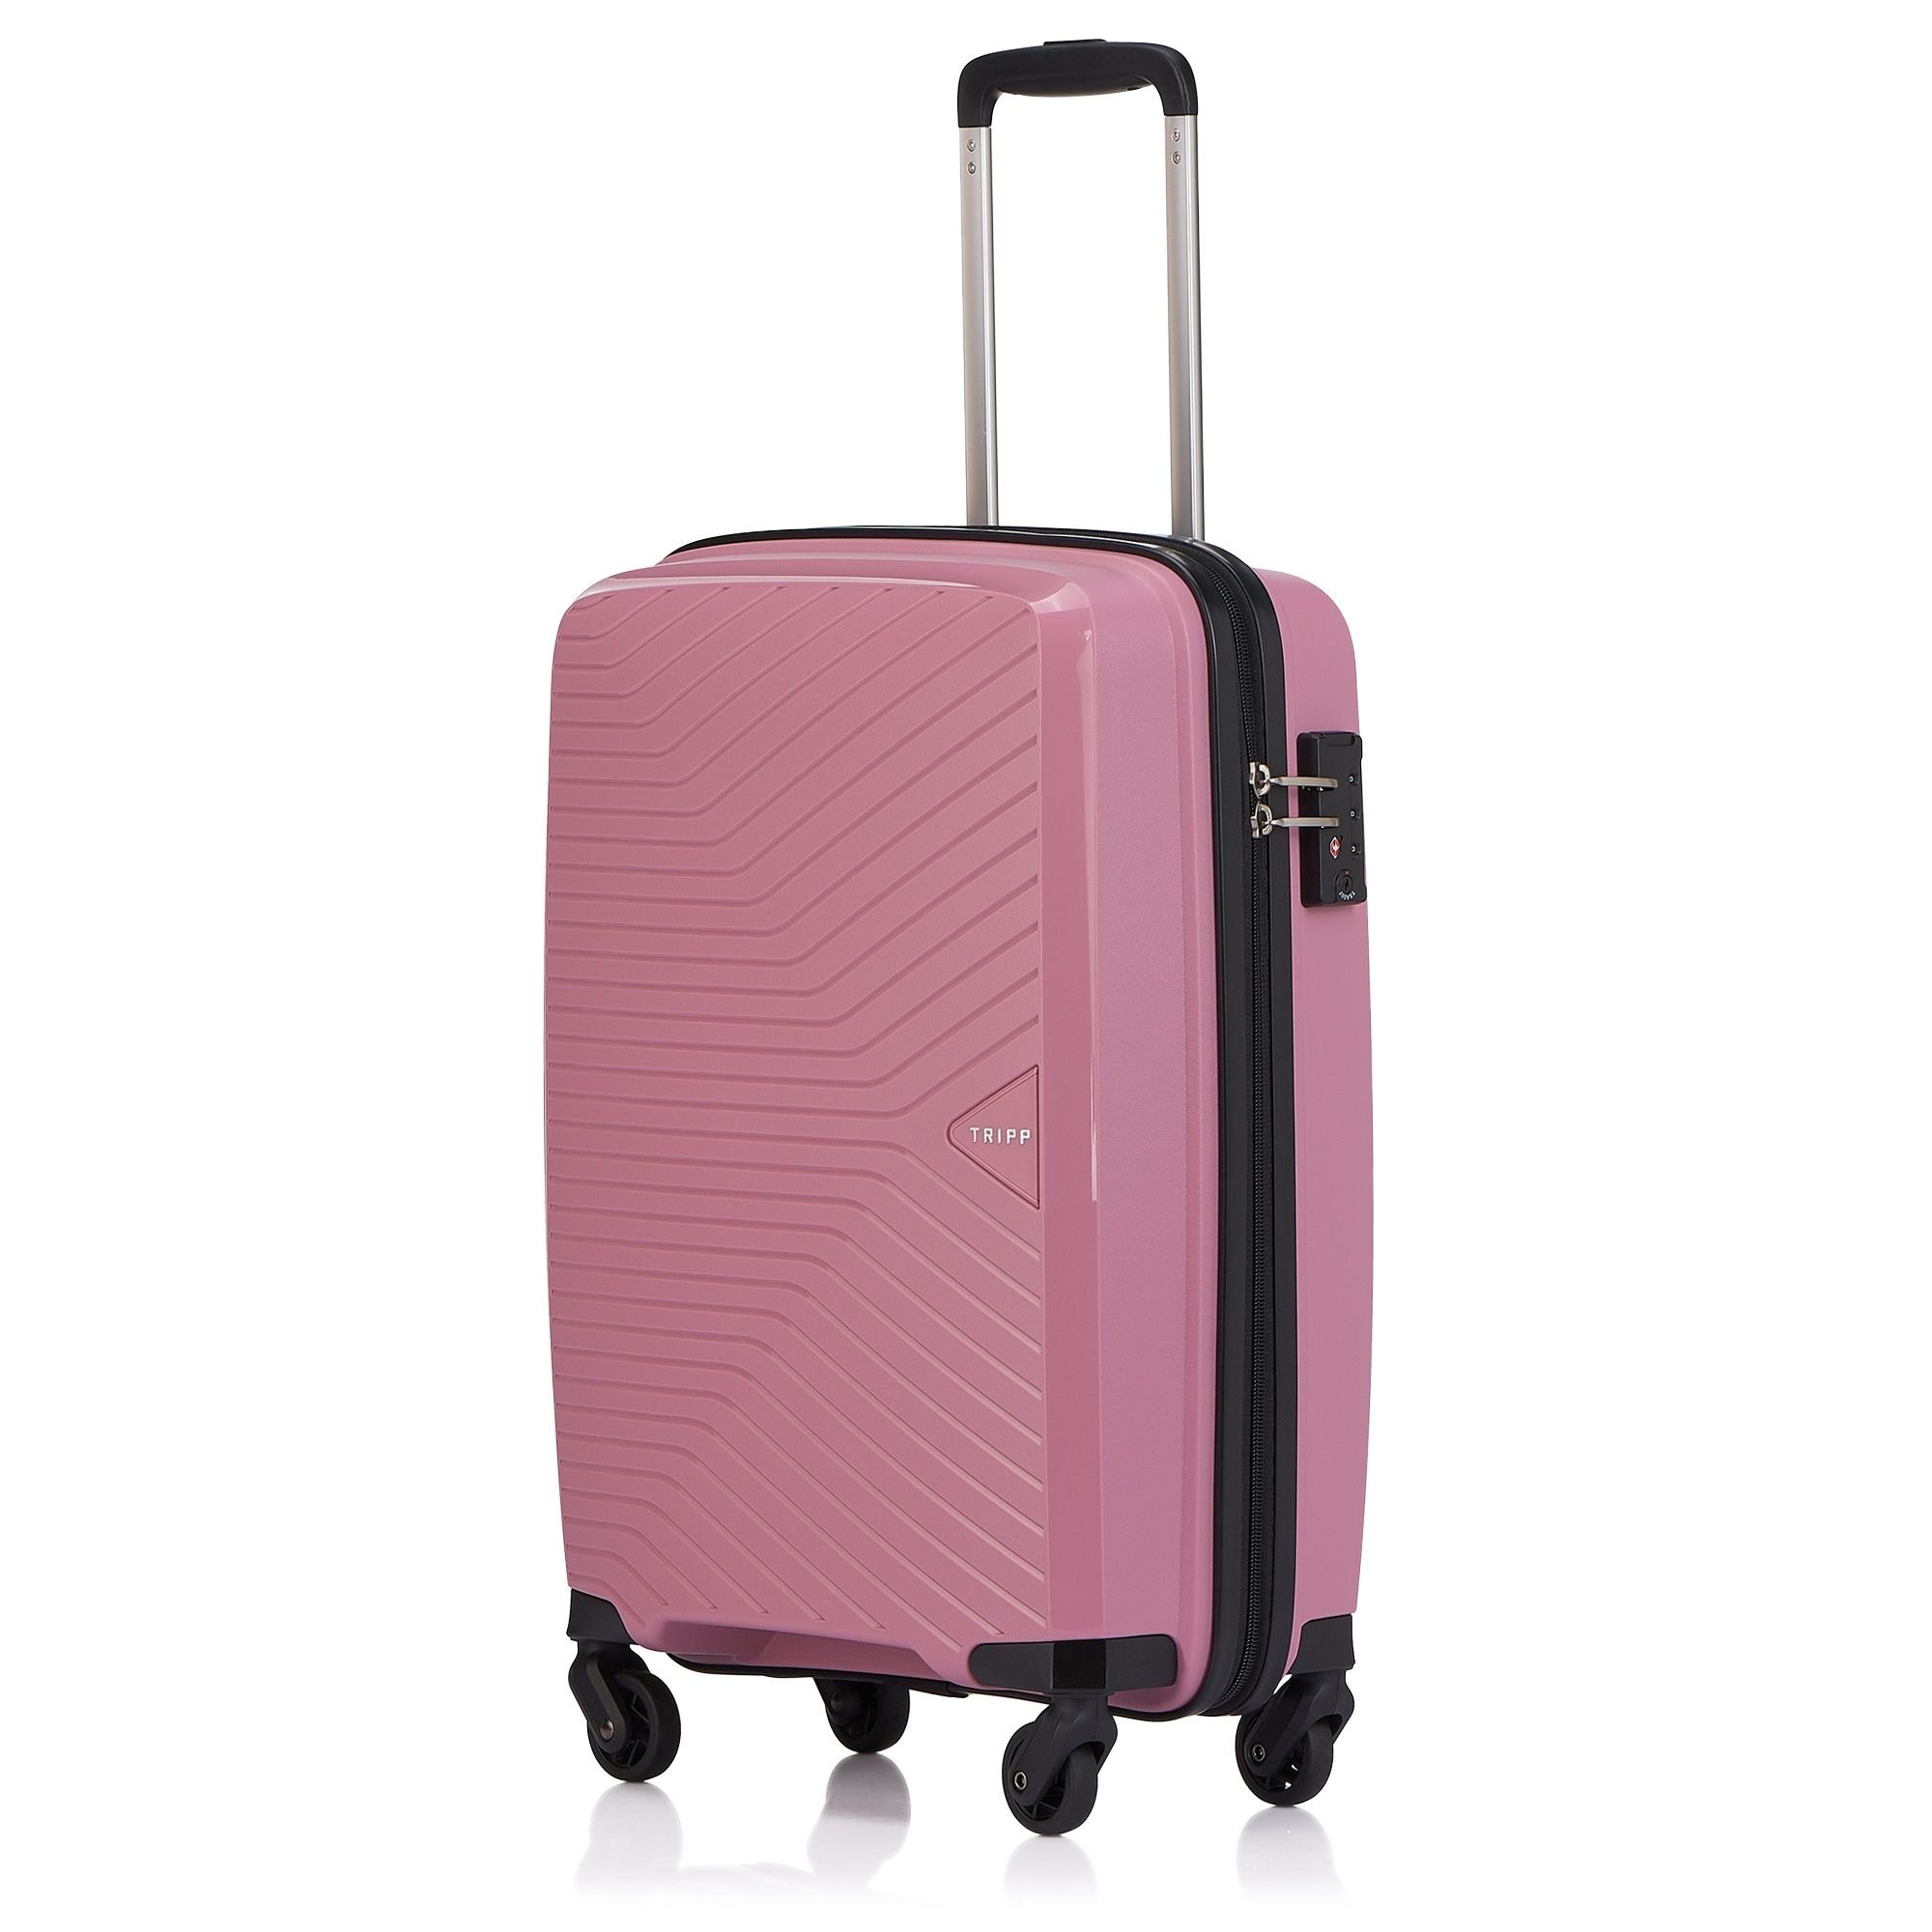 Tripp Chic Rose Cabin Suitcase 55x39x20cm - Tripp Ltd